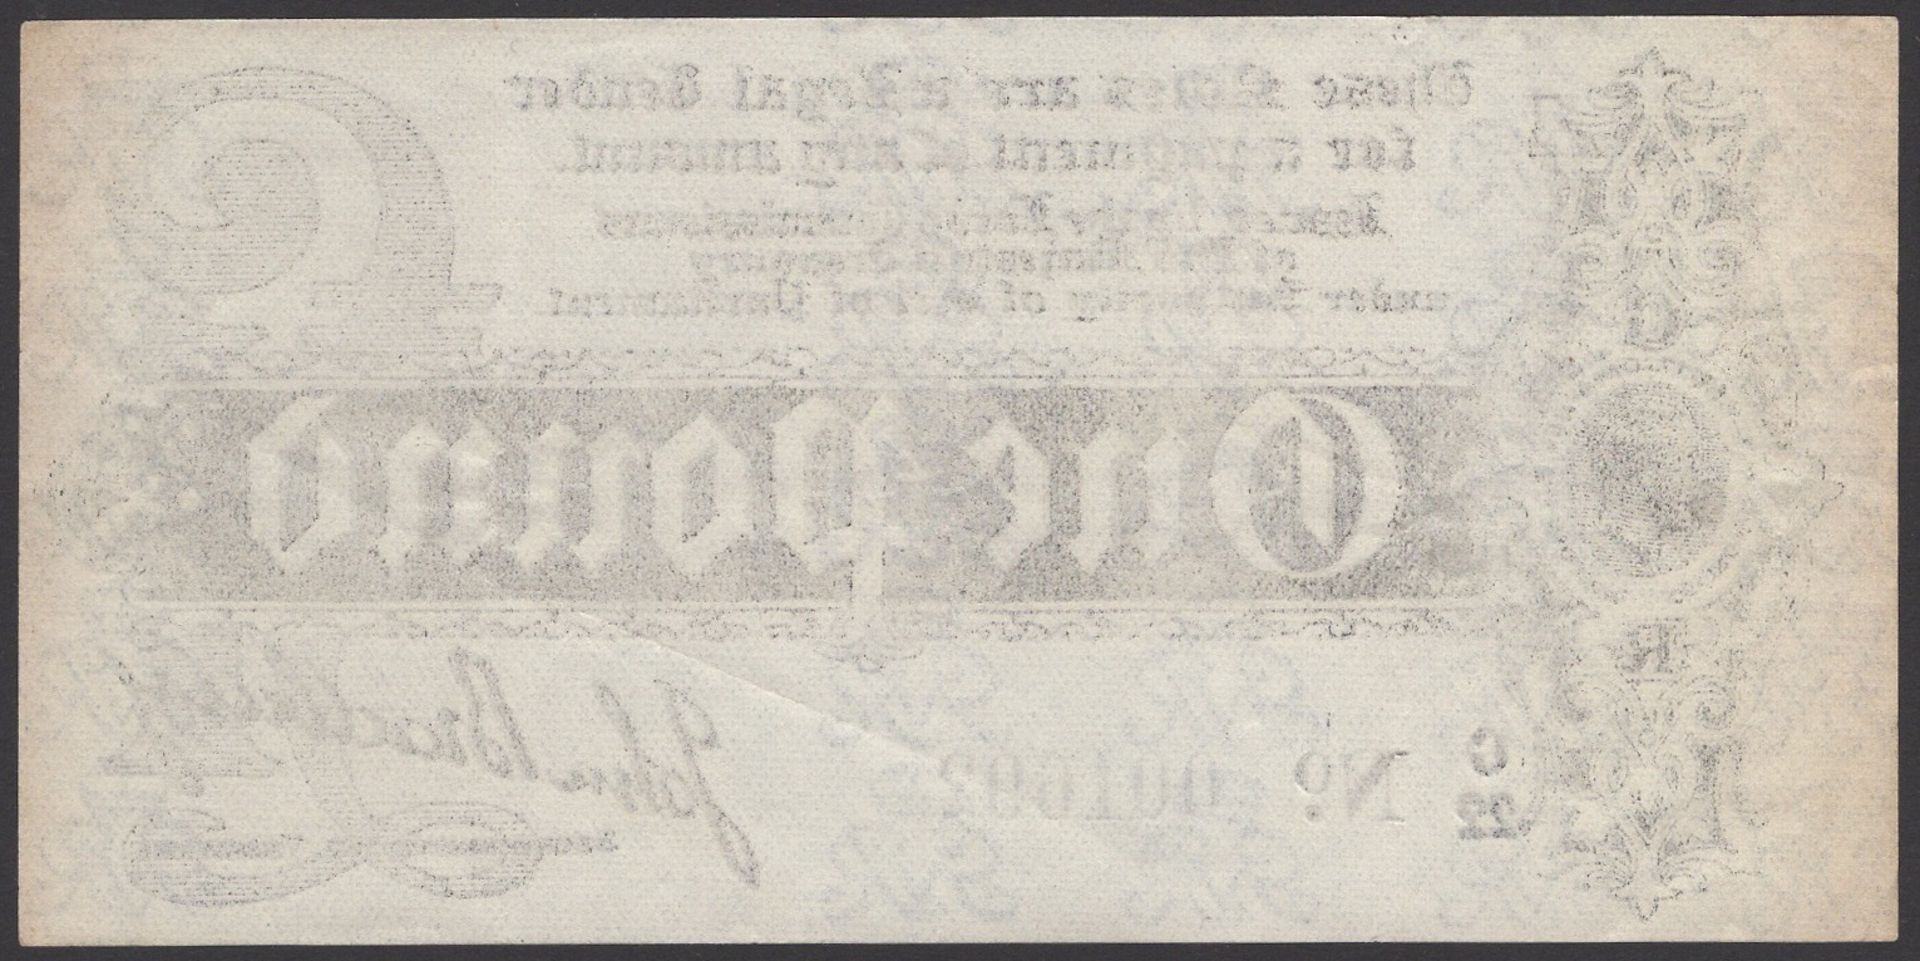 Treasury Series, John Bradbury, Â£1, 7 August 1914, serial number C/22 001692, lovely fresh p... - Image 2 of 2